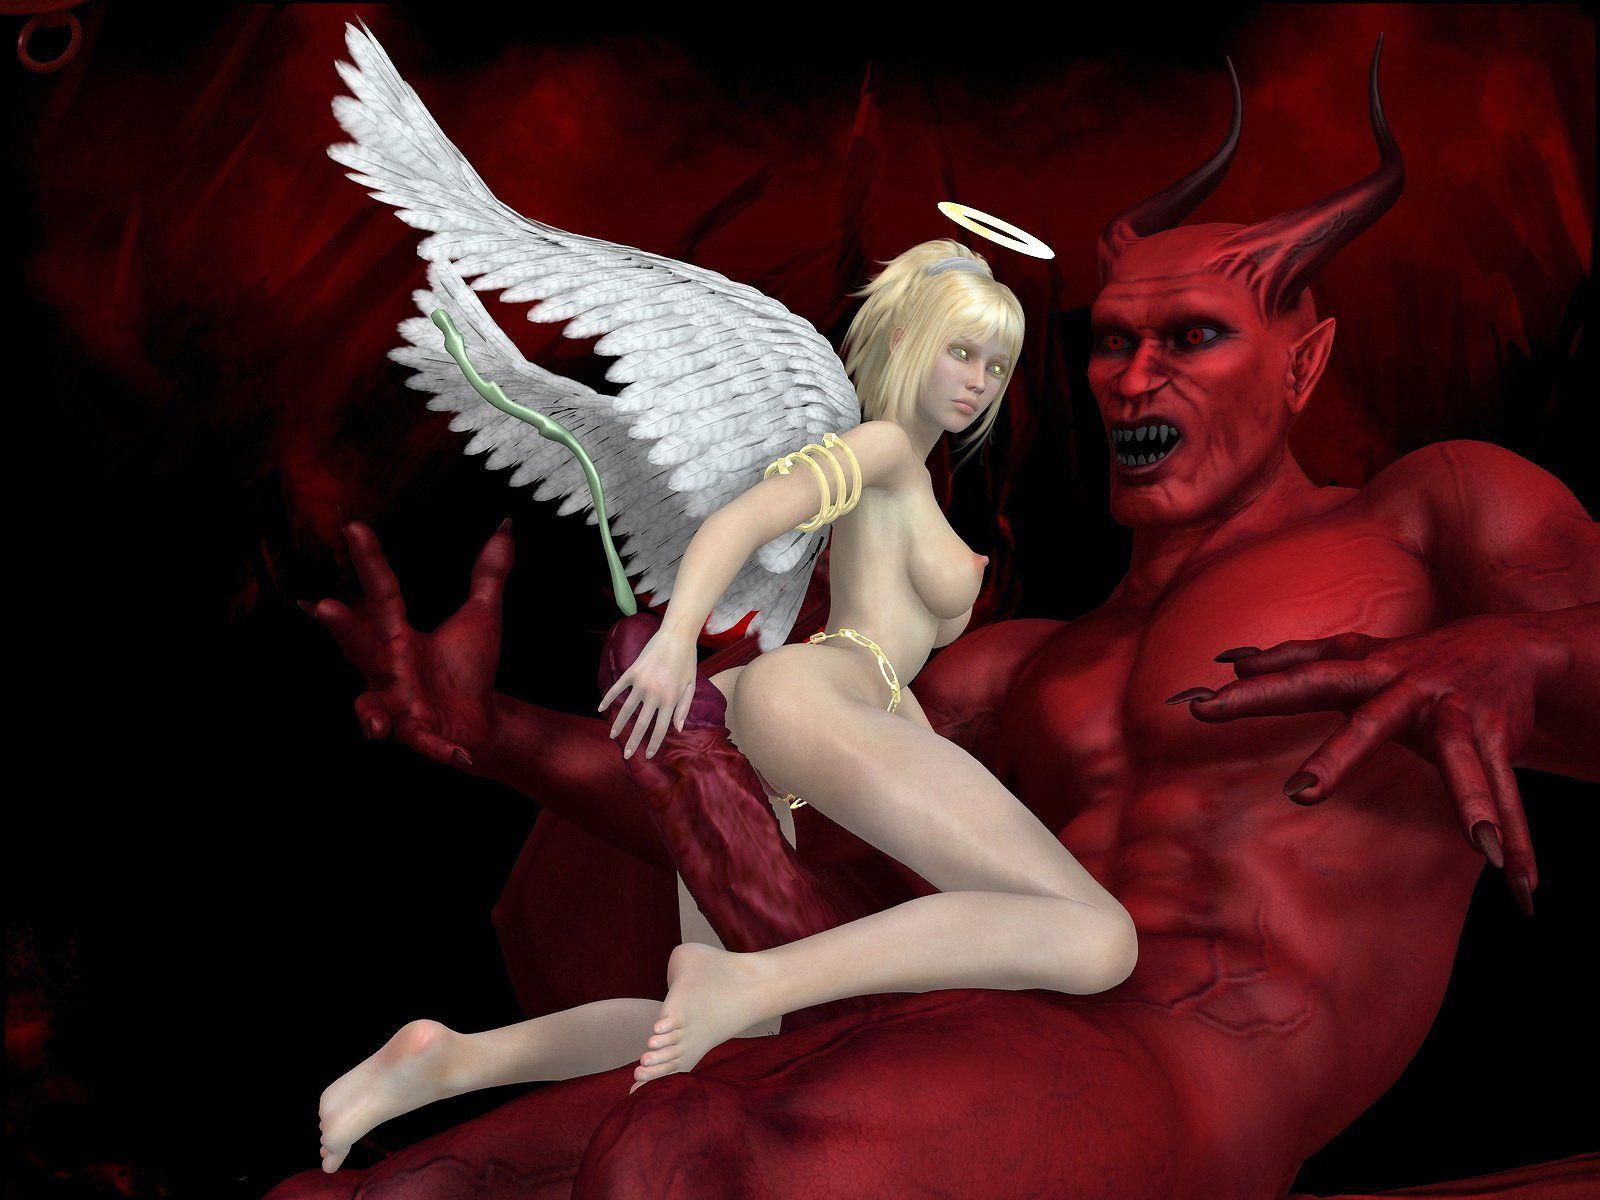 Naked angels having sex